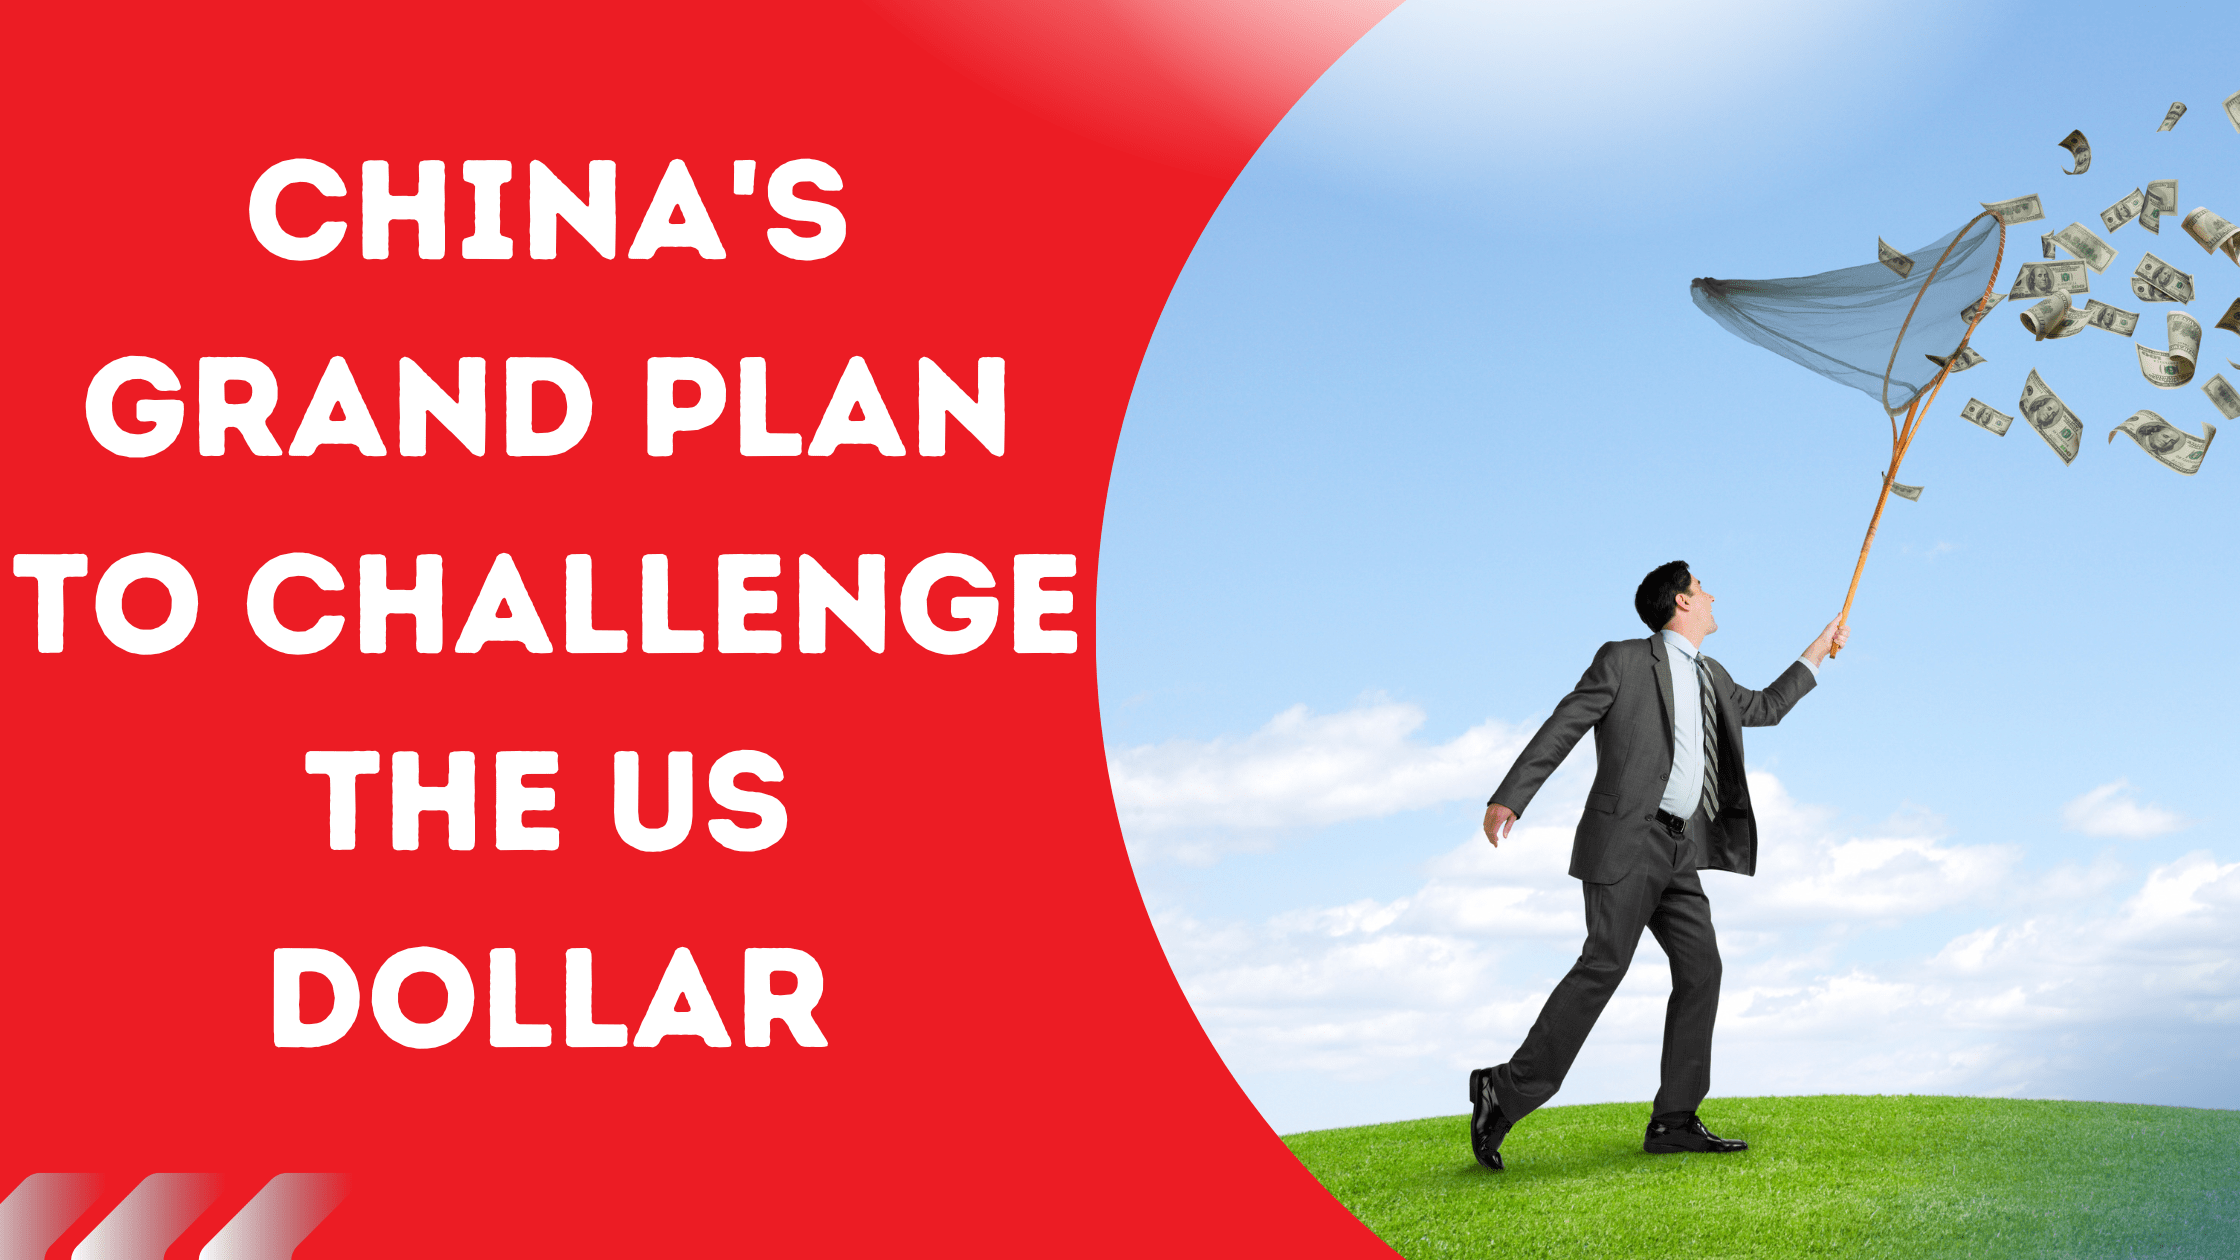 China Challenge the US Dollar